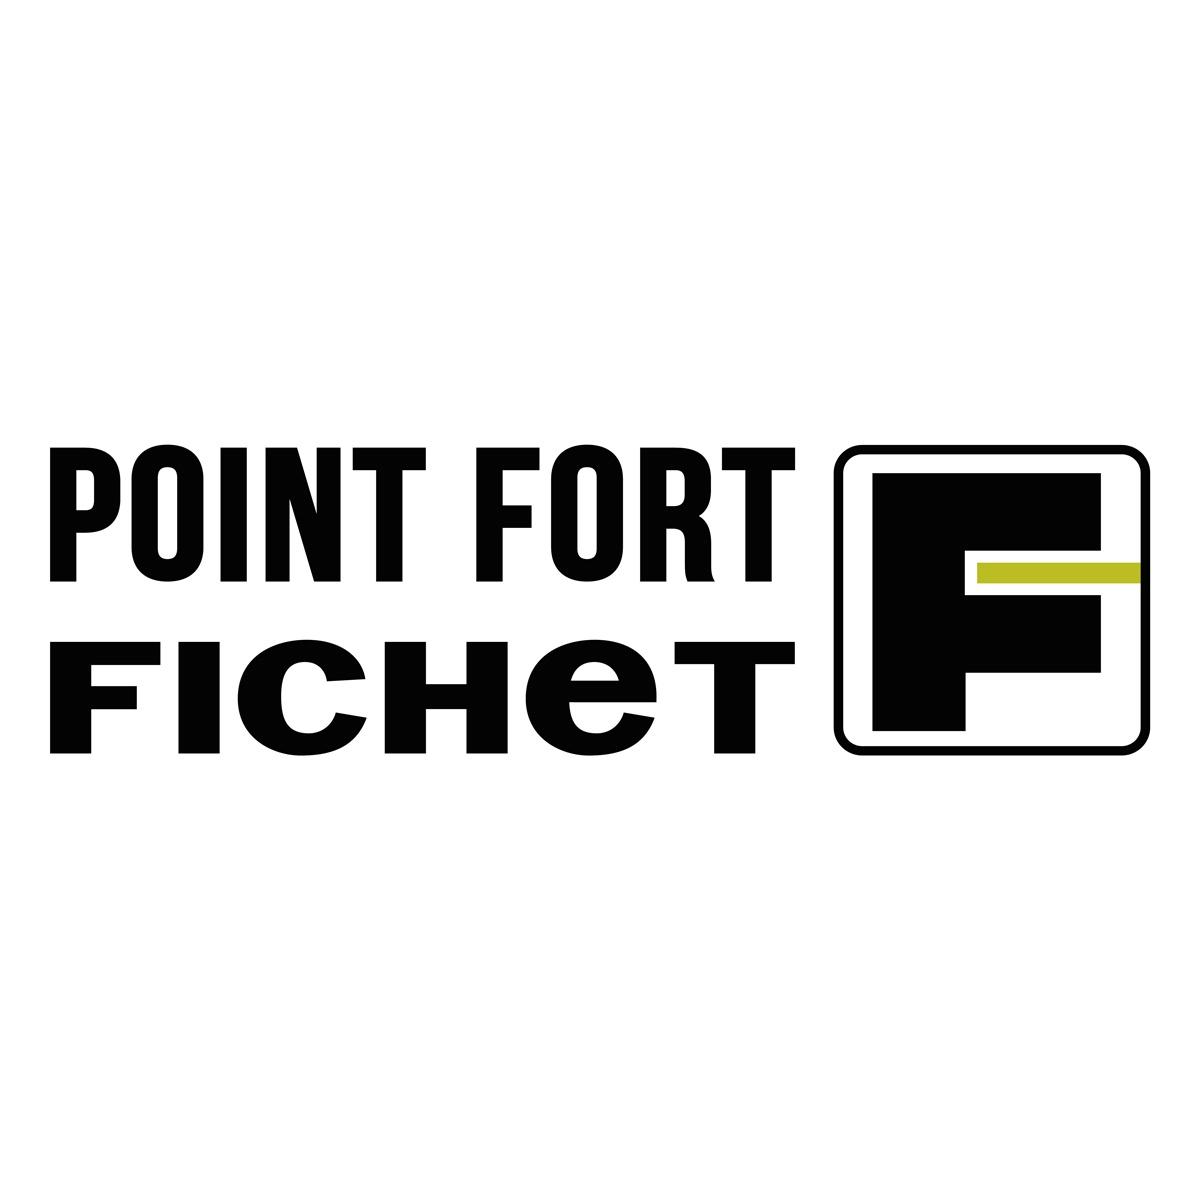 Pro Signal Courbevoie - Point Fort Fichet Courbevoie